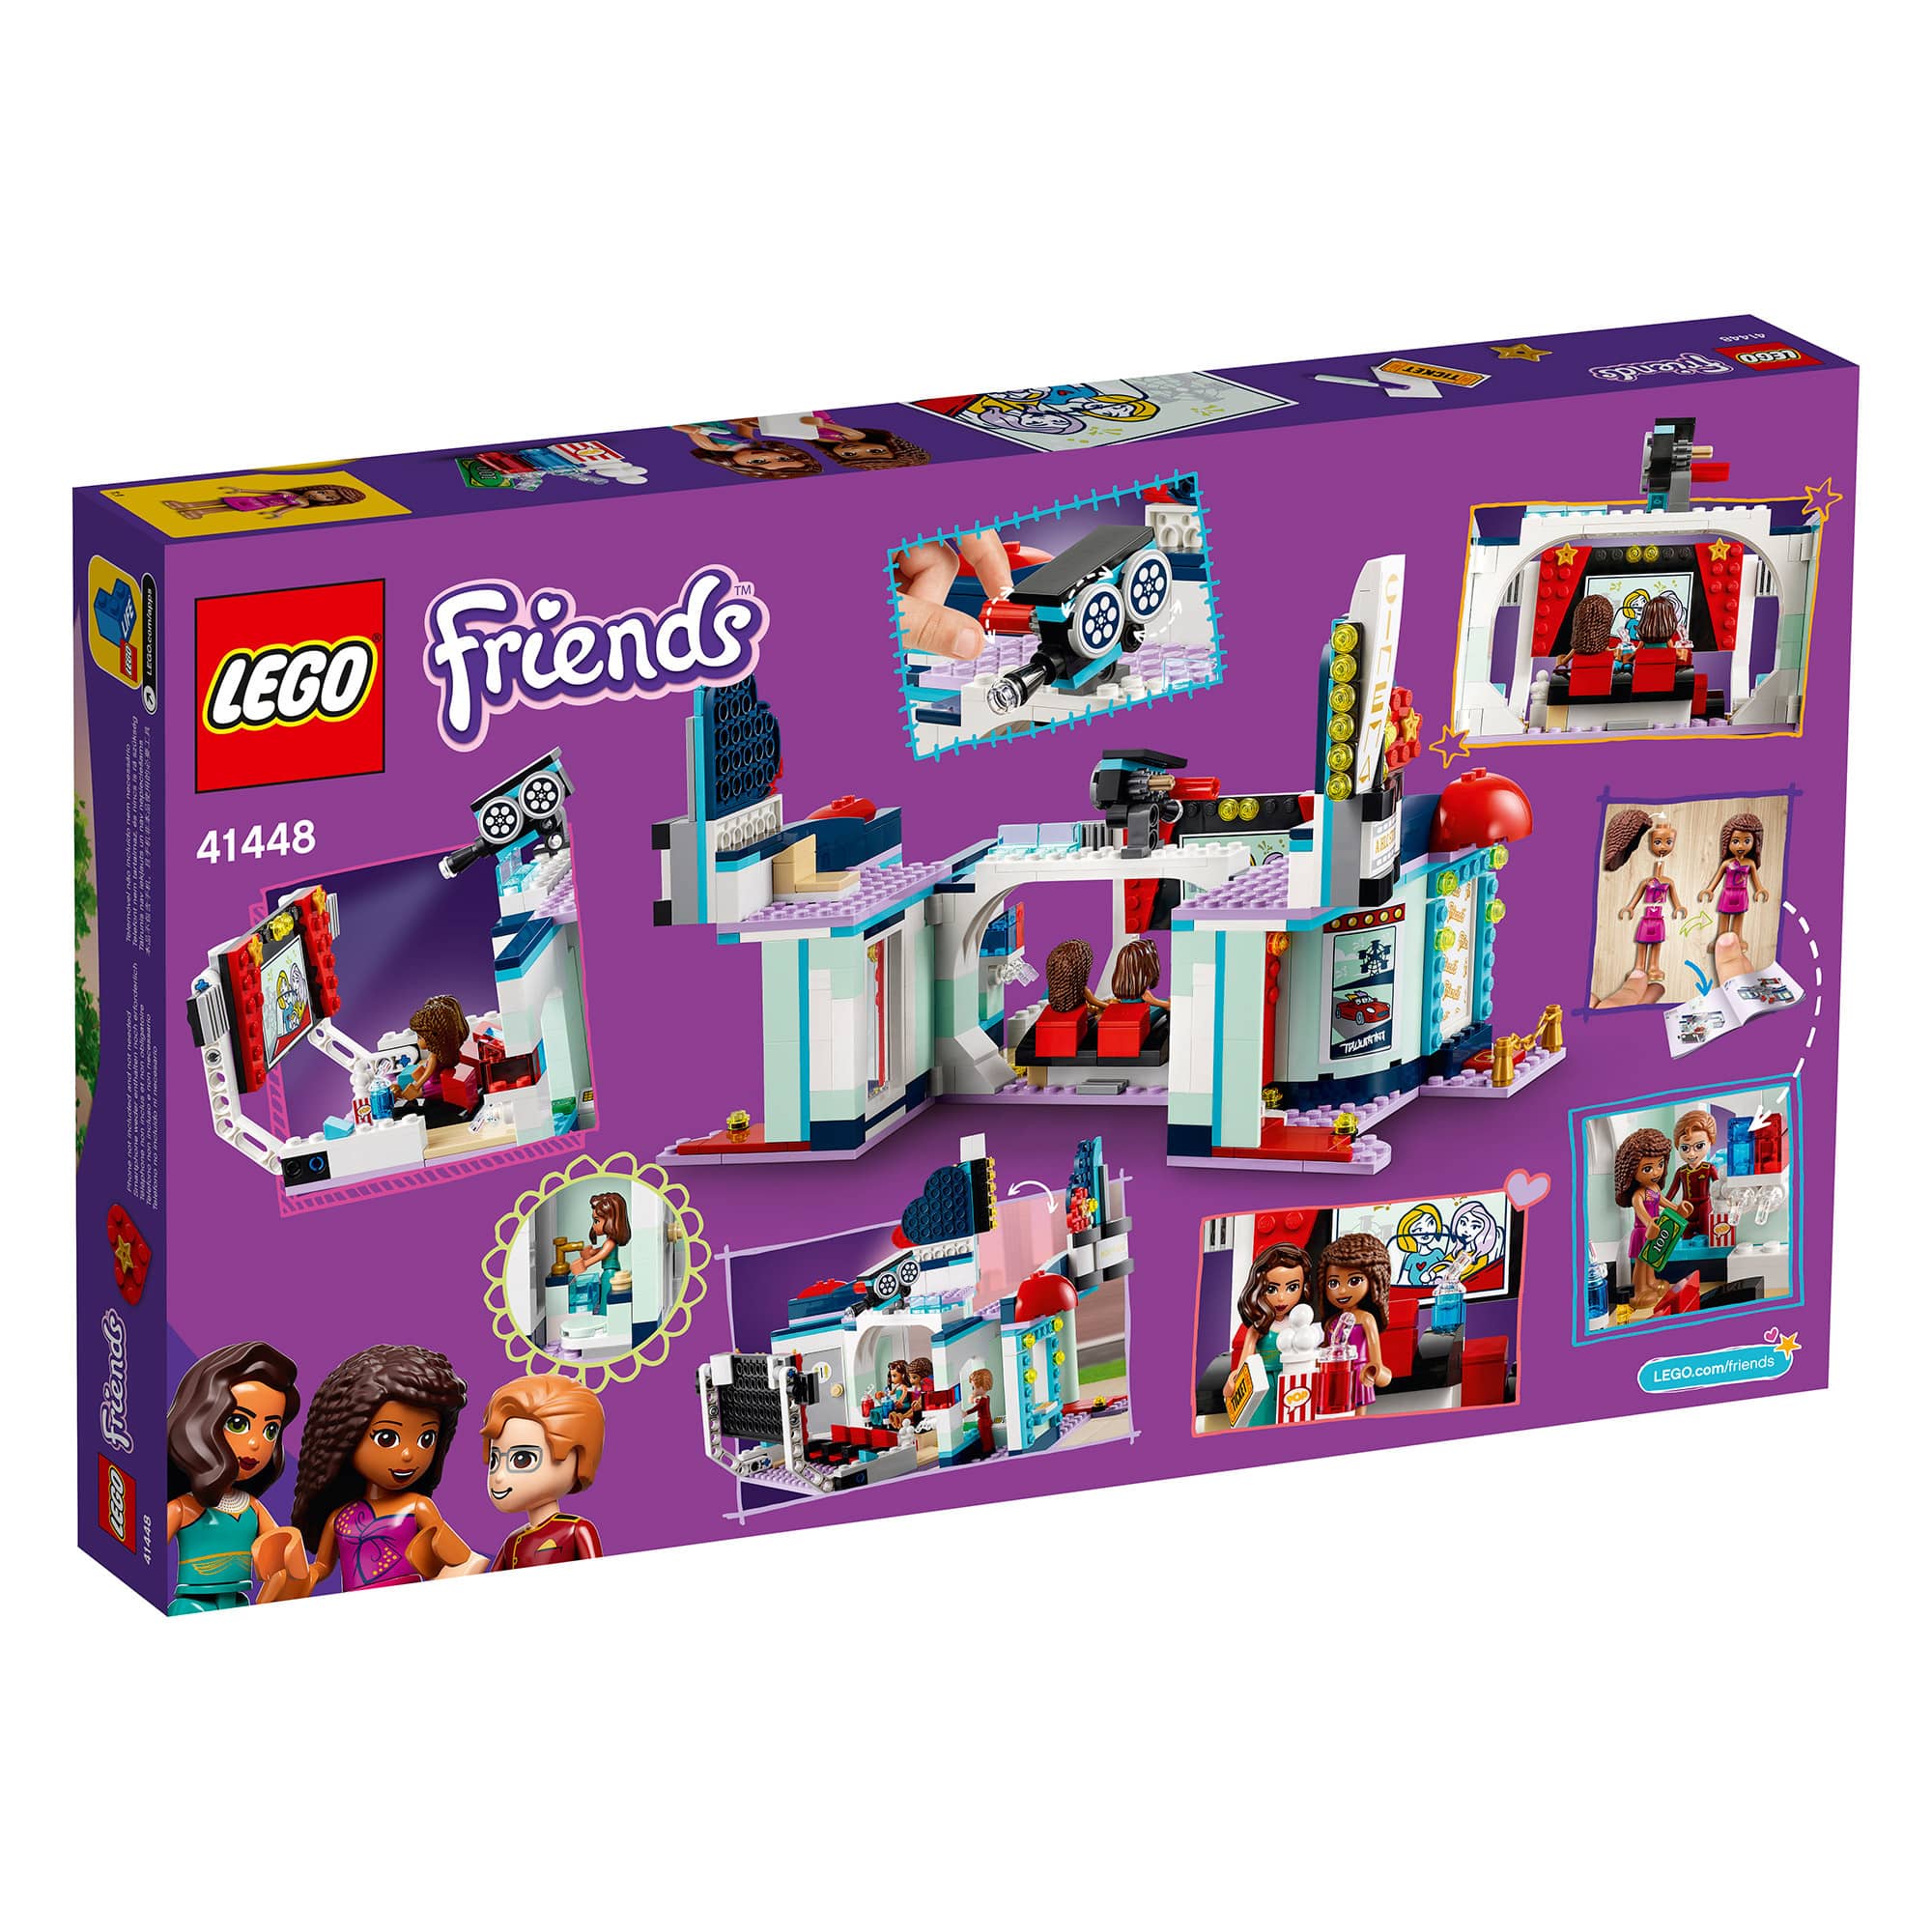 LEGO Friends 41448 - Heartlake City Cinema